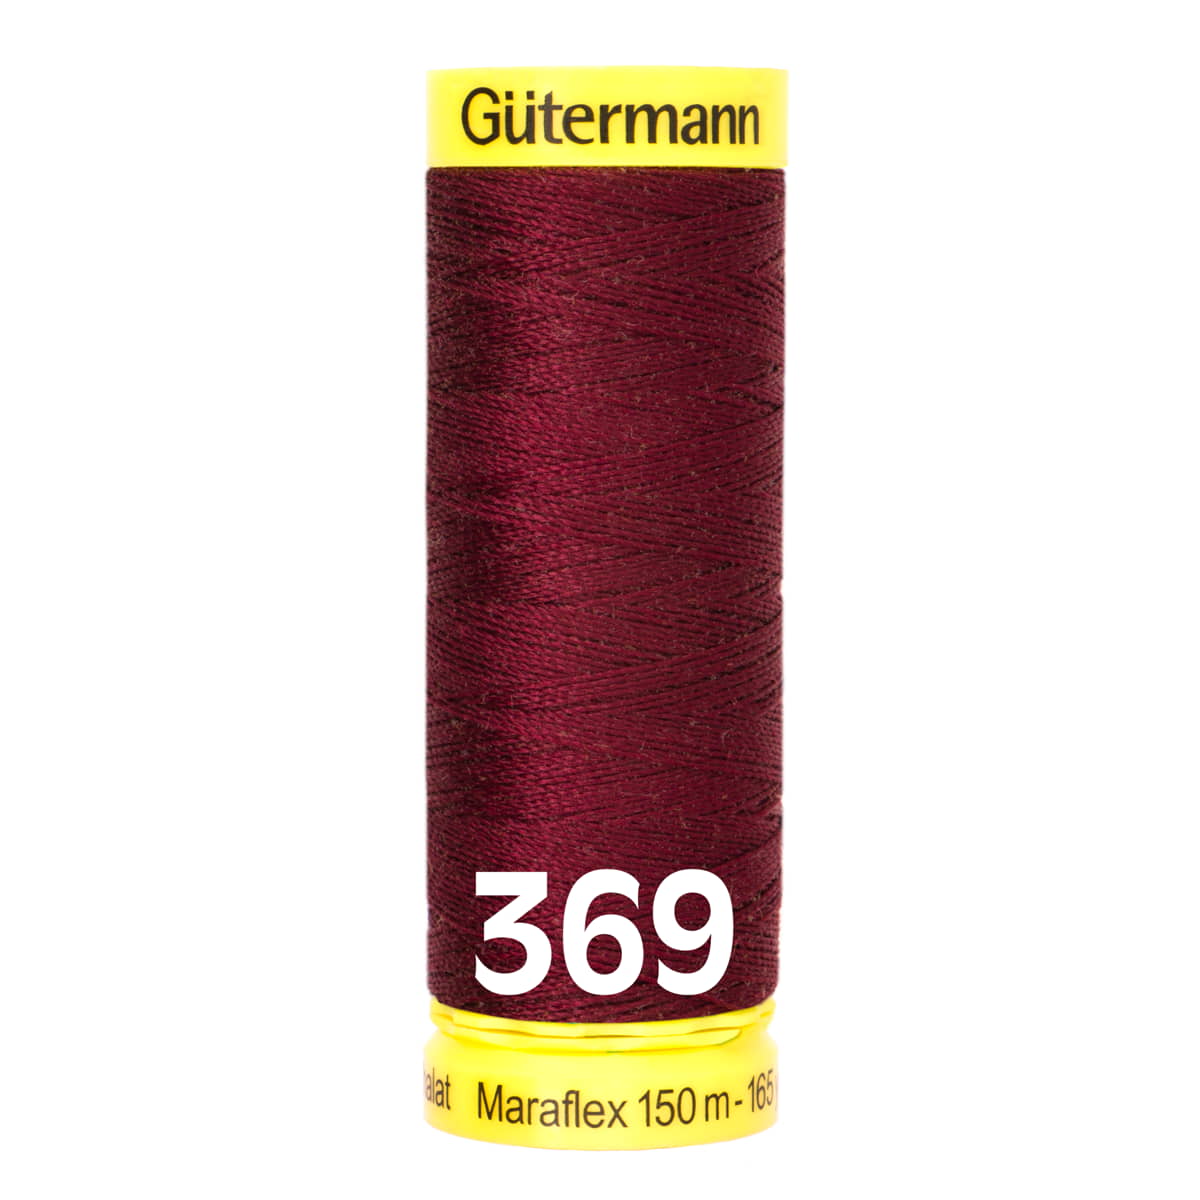 Gütermann MaraFlex 150m - 369 bordeaux GUTERMANN-MARAFLEX-150-369 4029394998812 - Fourniturenkraam.nl